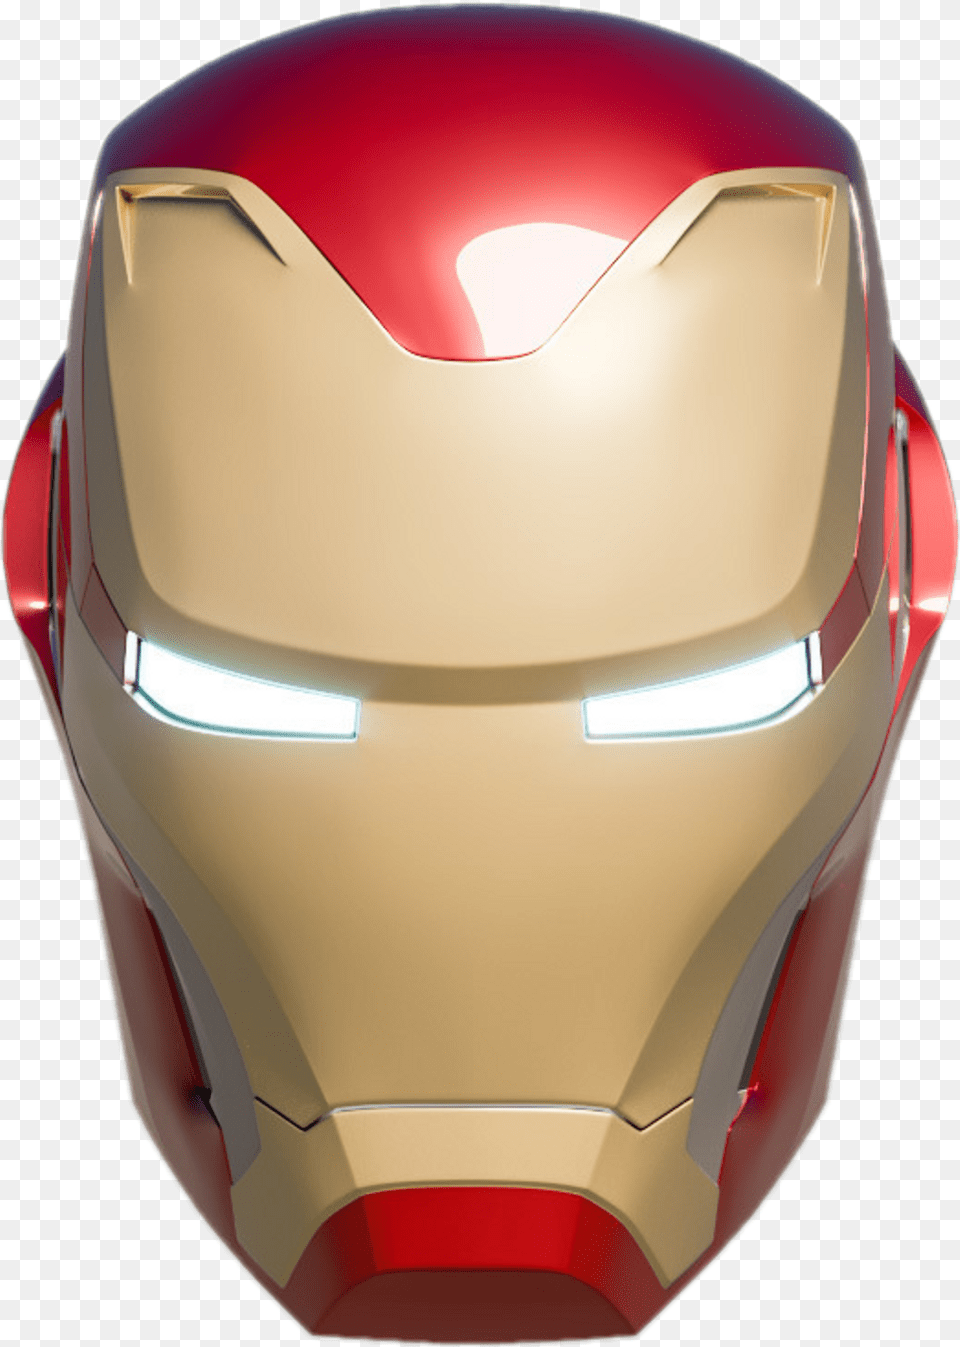 Ironman Marvel Comics Movie Marvelcinematicuniverse Iron Man Infinity War Helmet Sketch, Crash Helmet Png